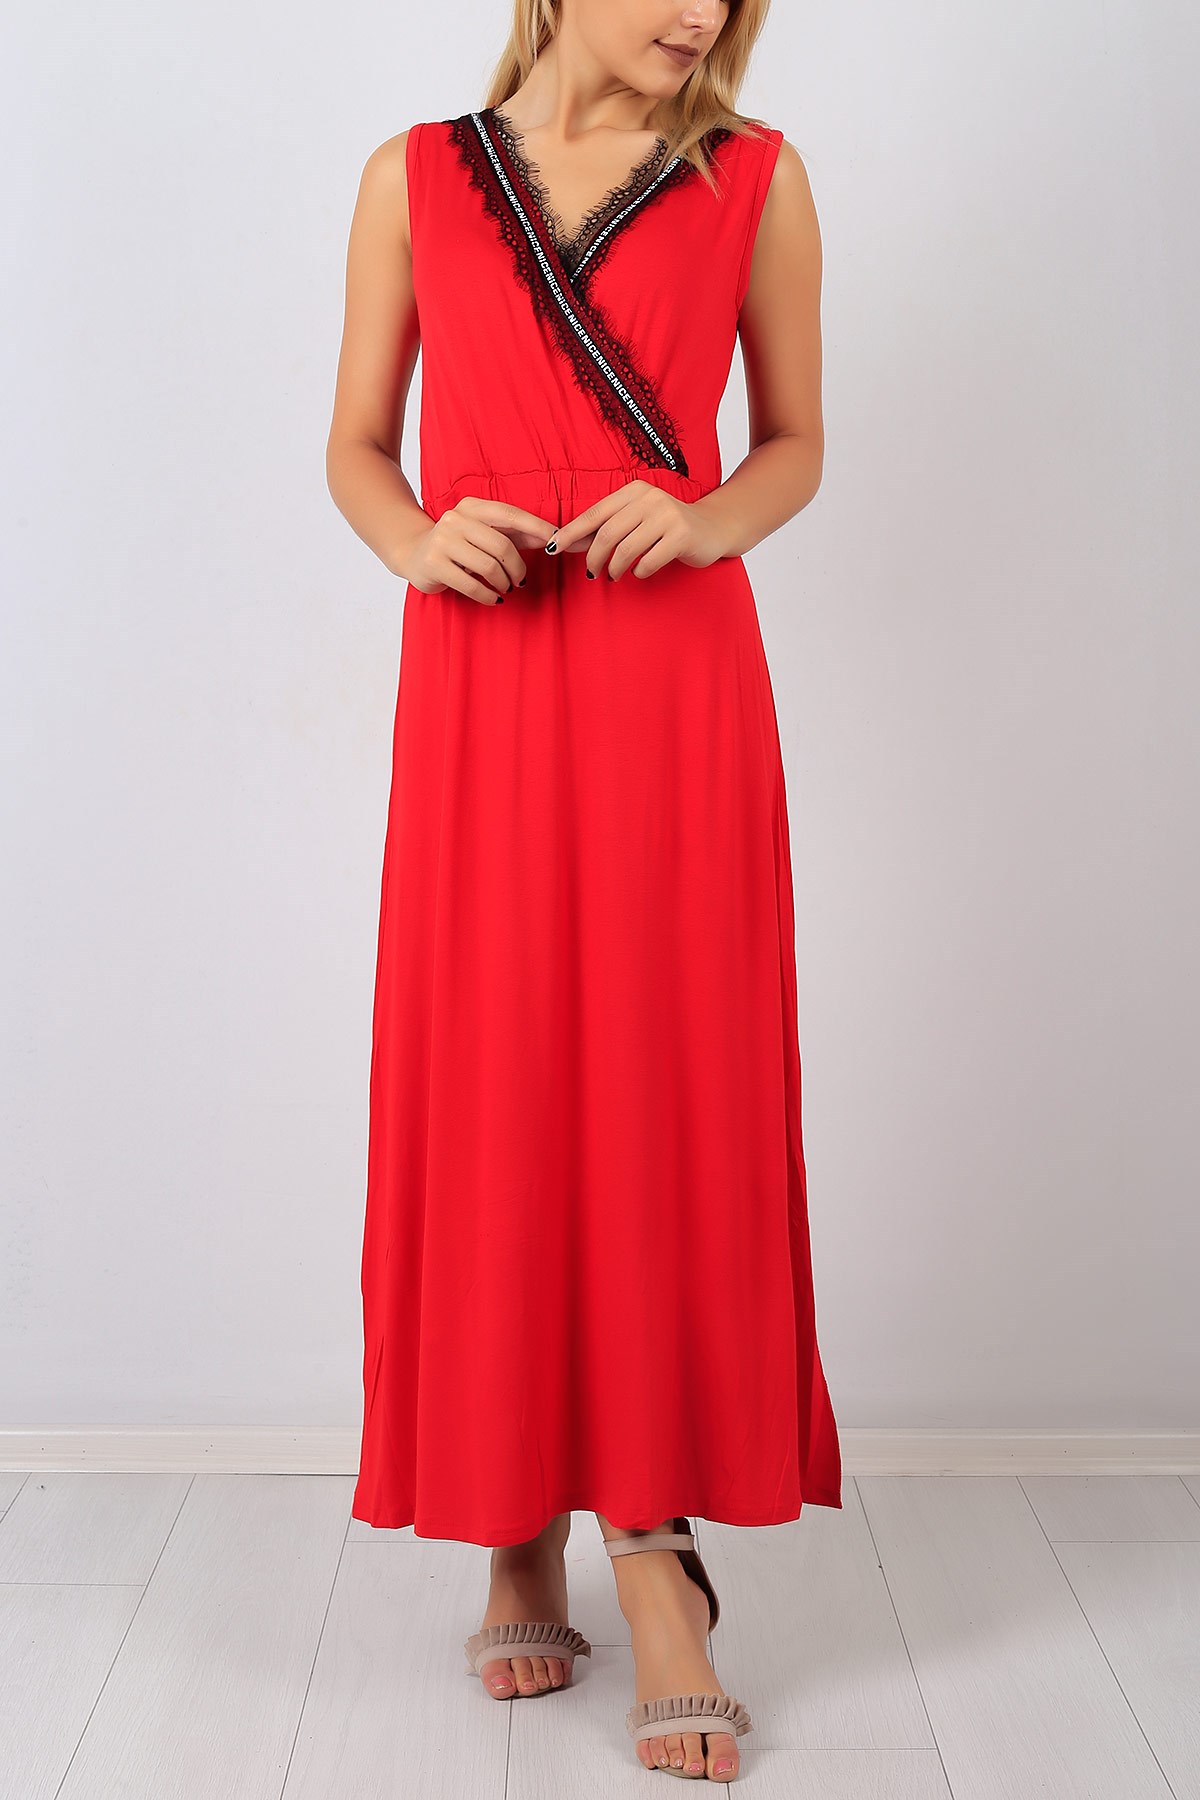 Kruvaze Yaka Kırmızı Bayan Elbise 8517B